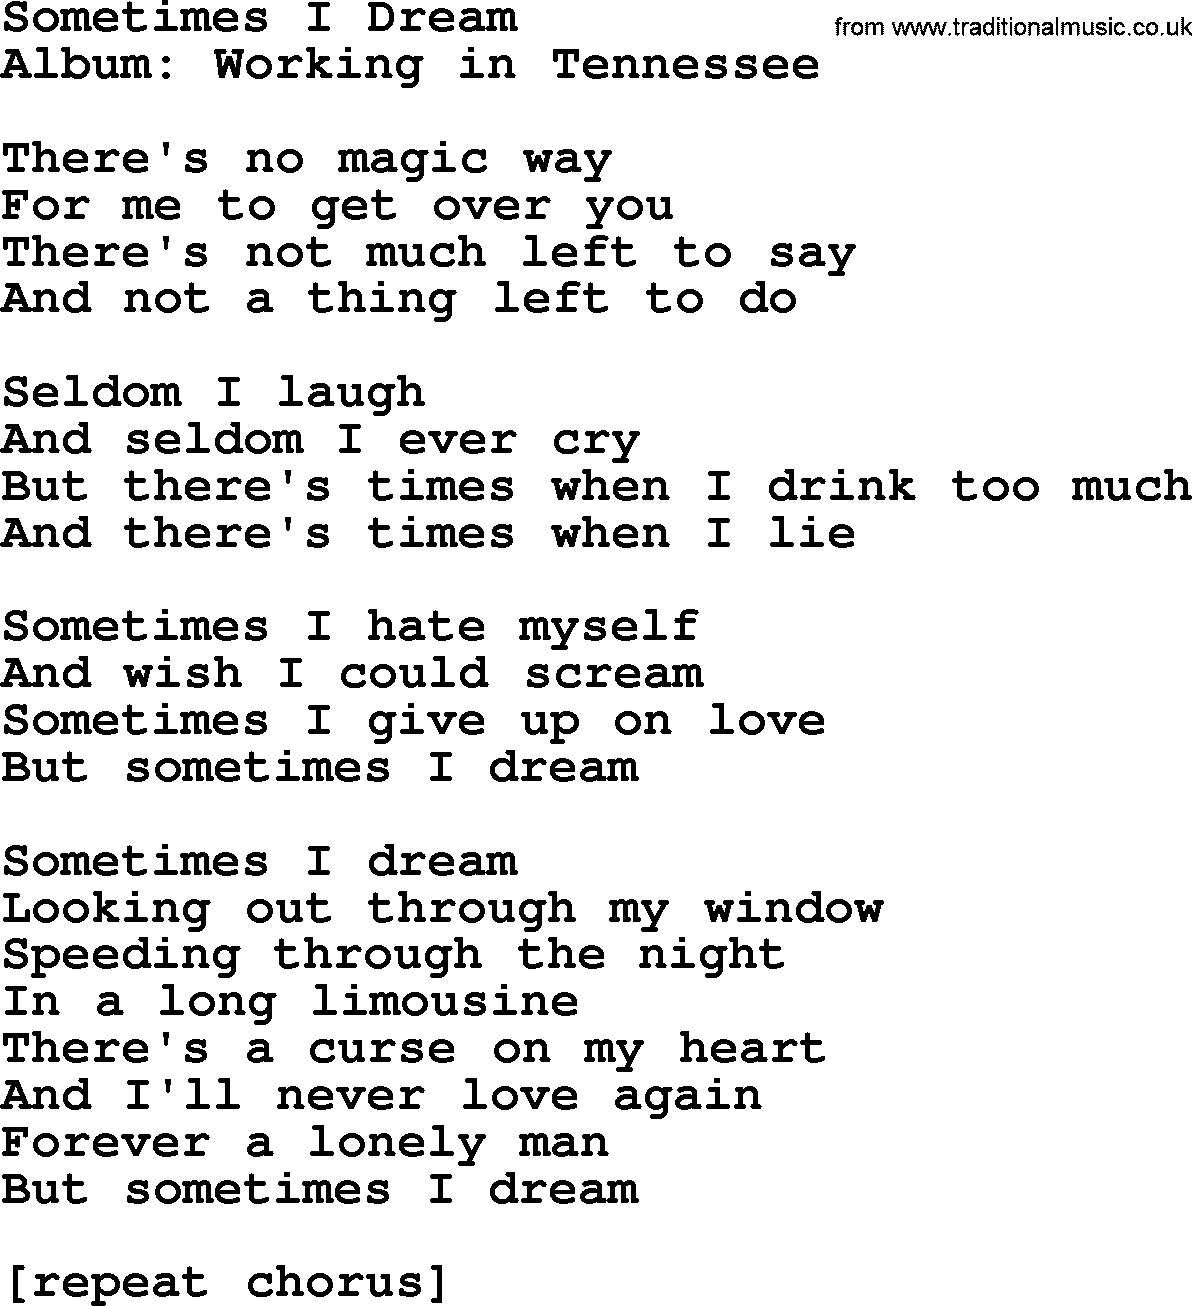 Merle Haggard song: Sometimes I Dream, lyrics.